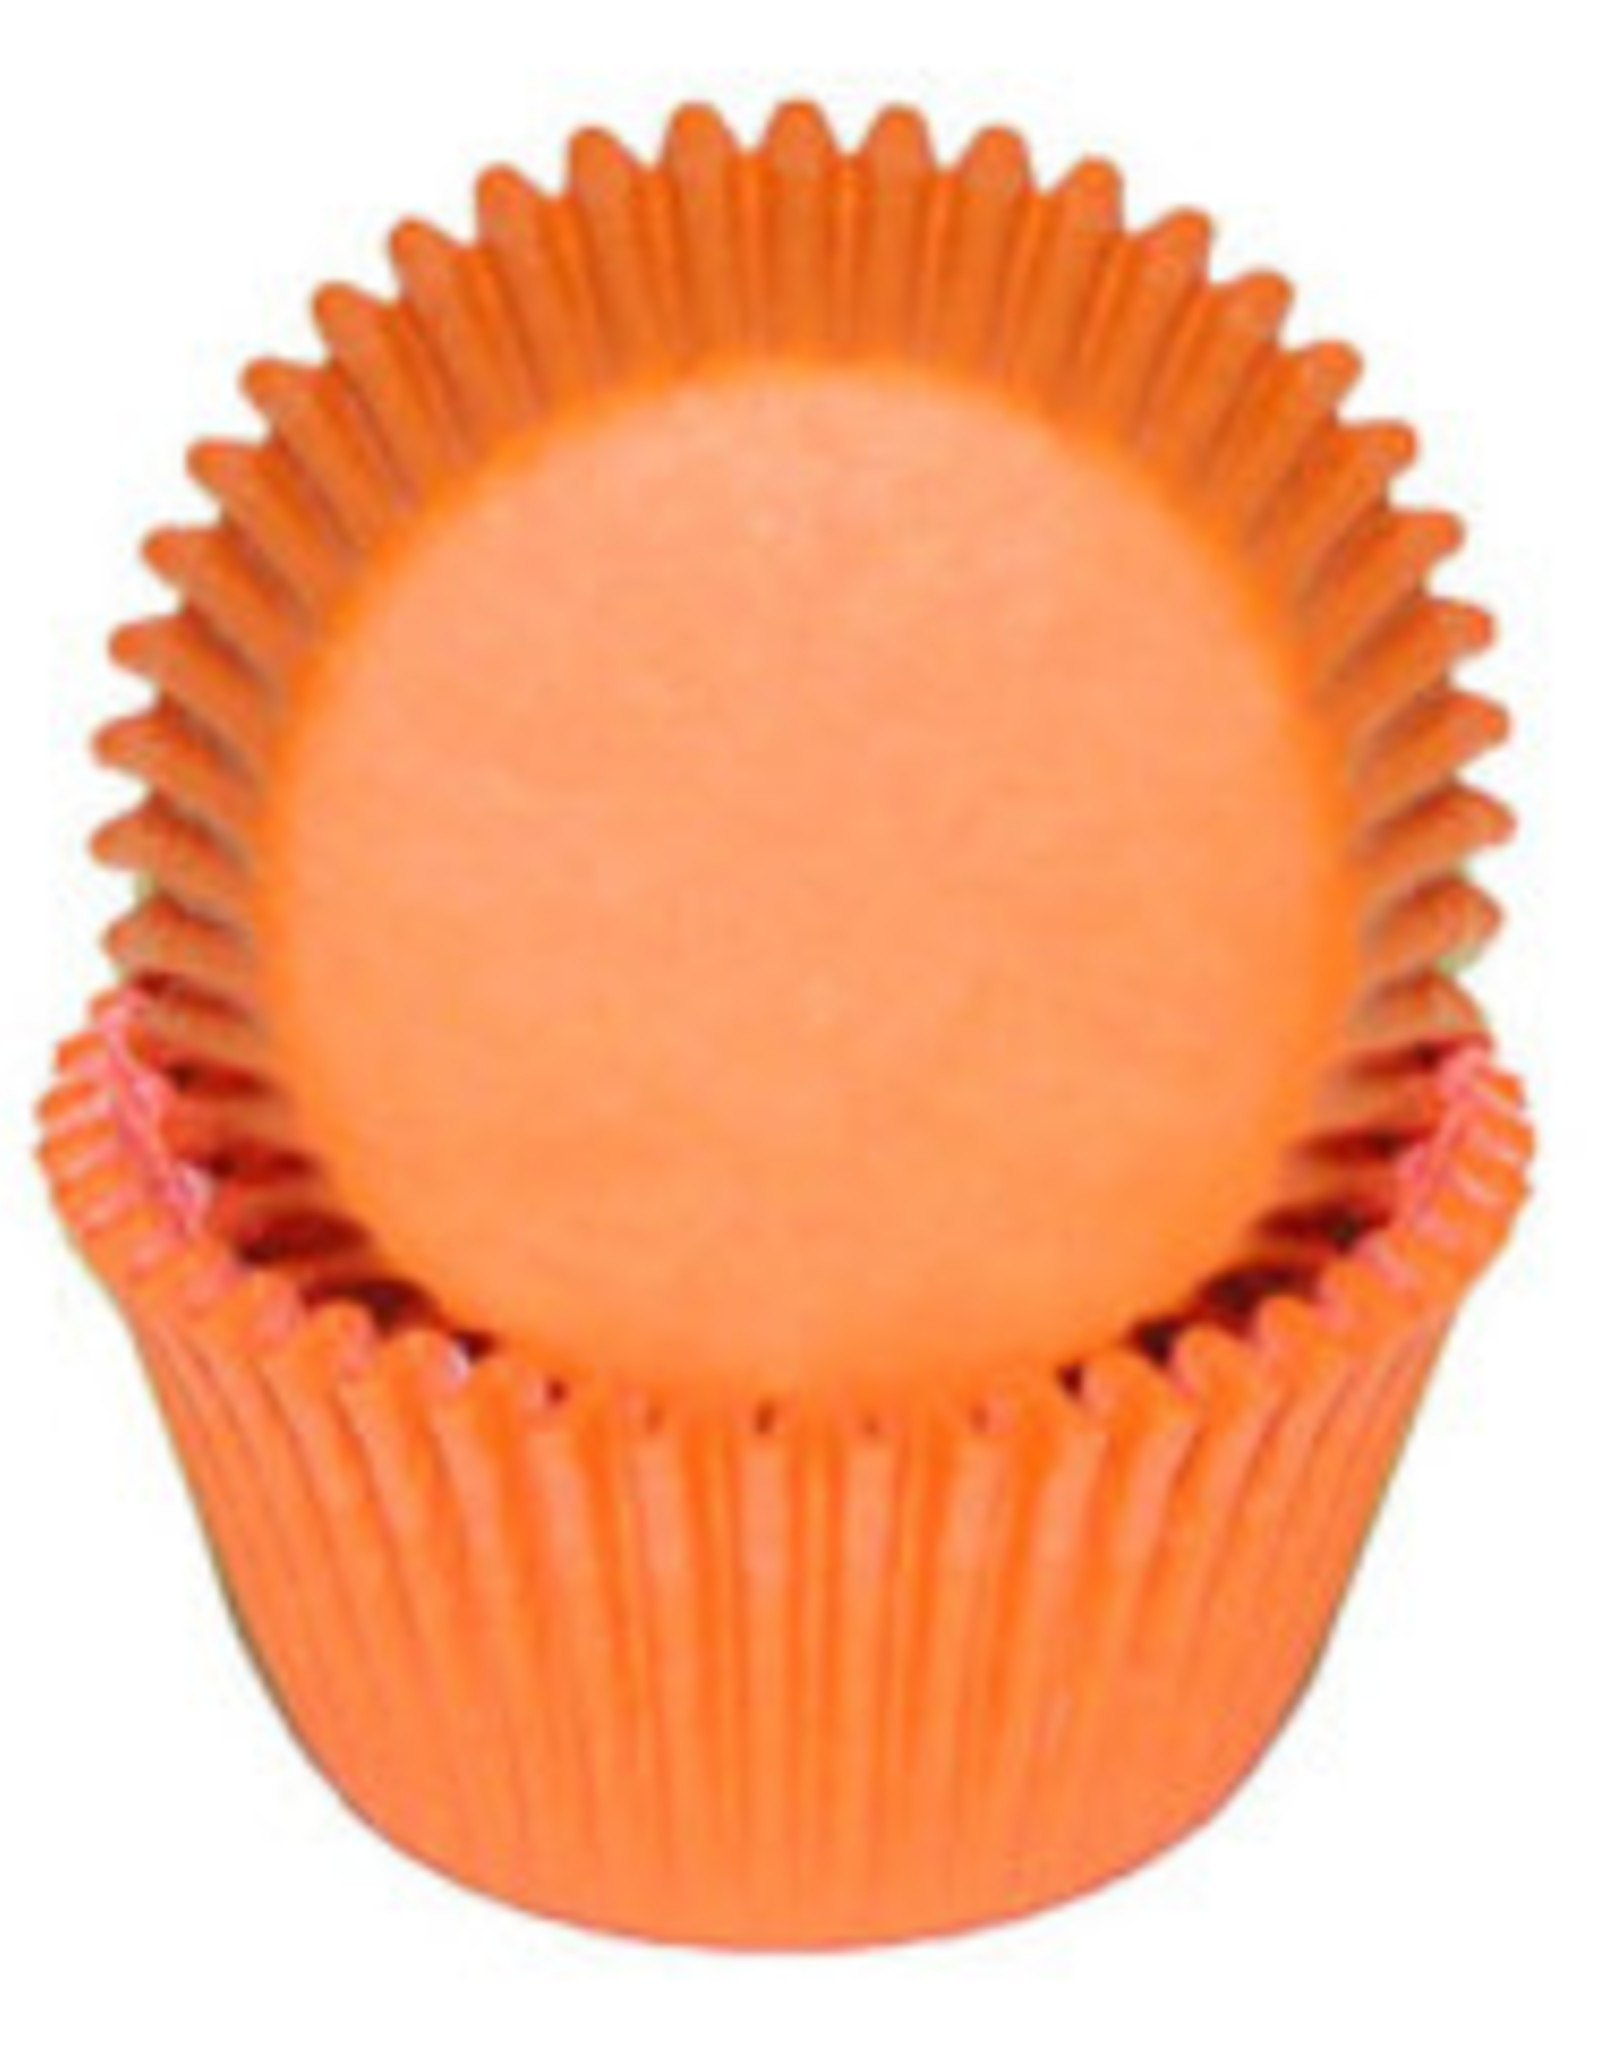 Orange Baking Cups - 500 ct